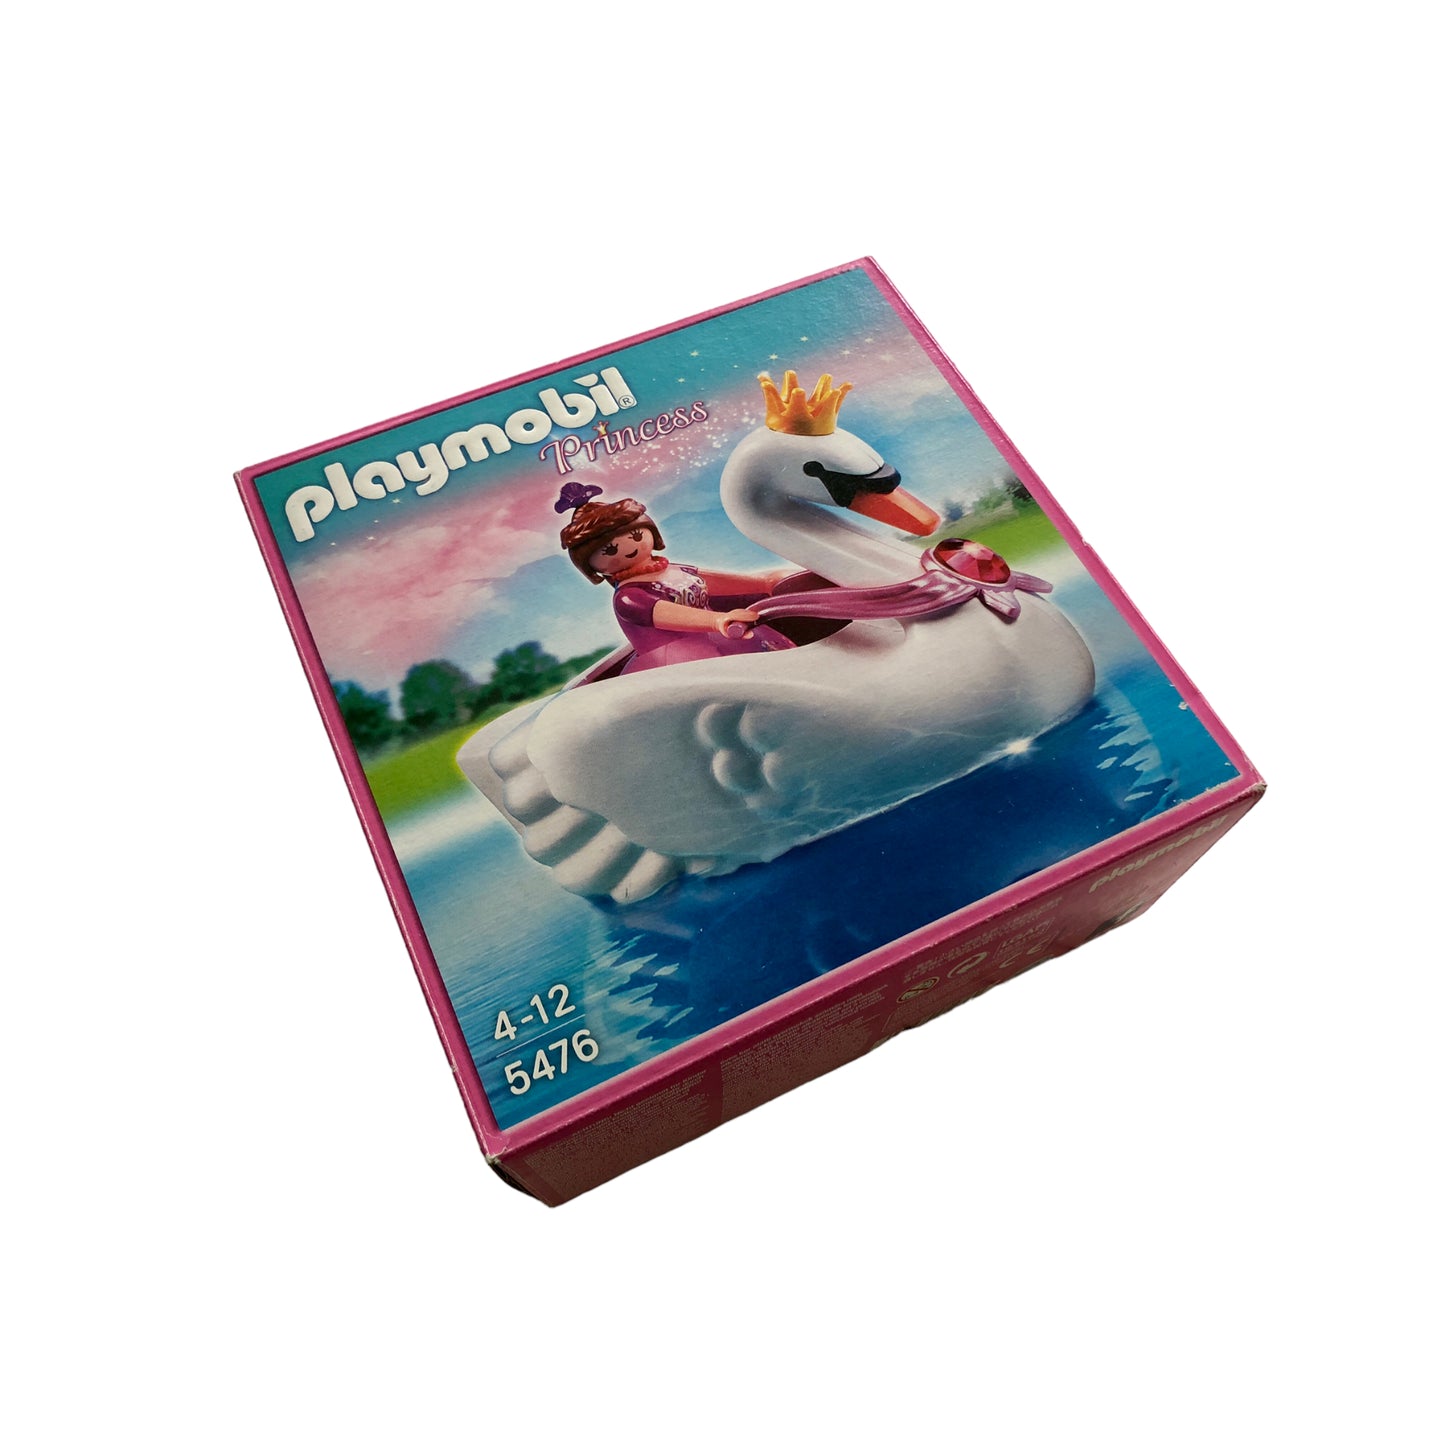 Playmobil Princess - Fairies Princess with swan boat